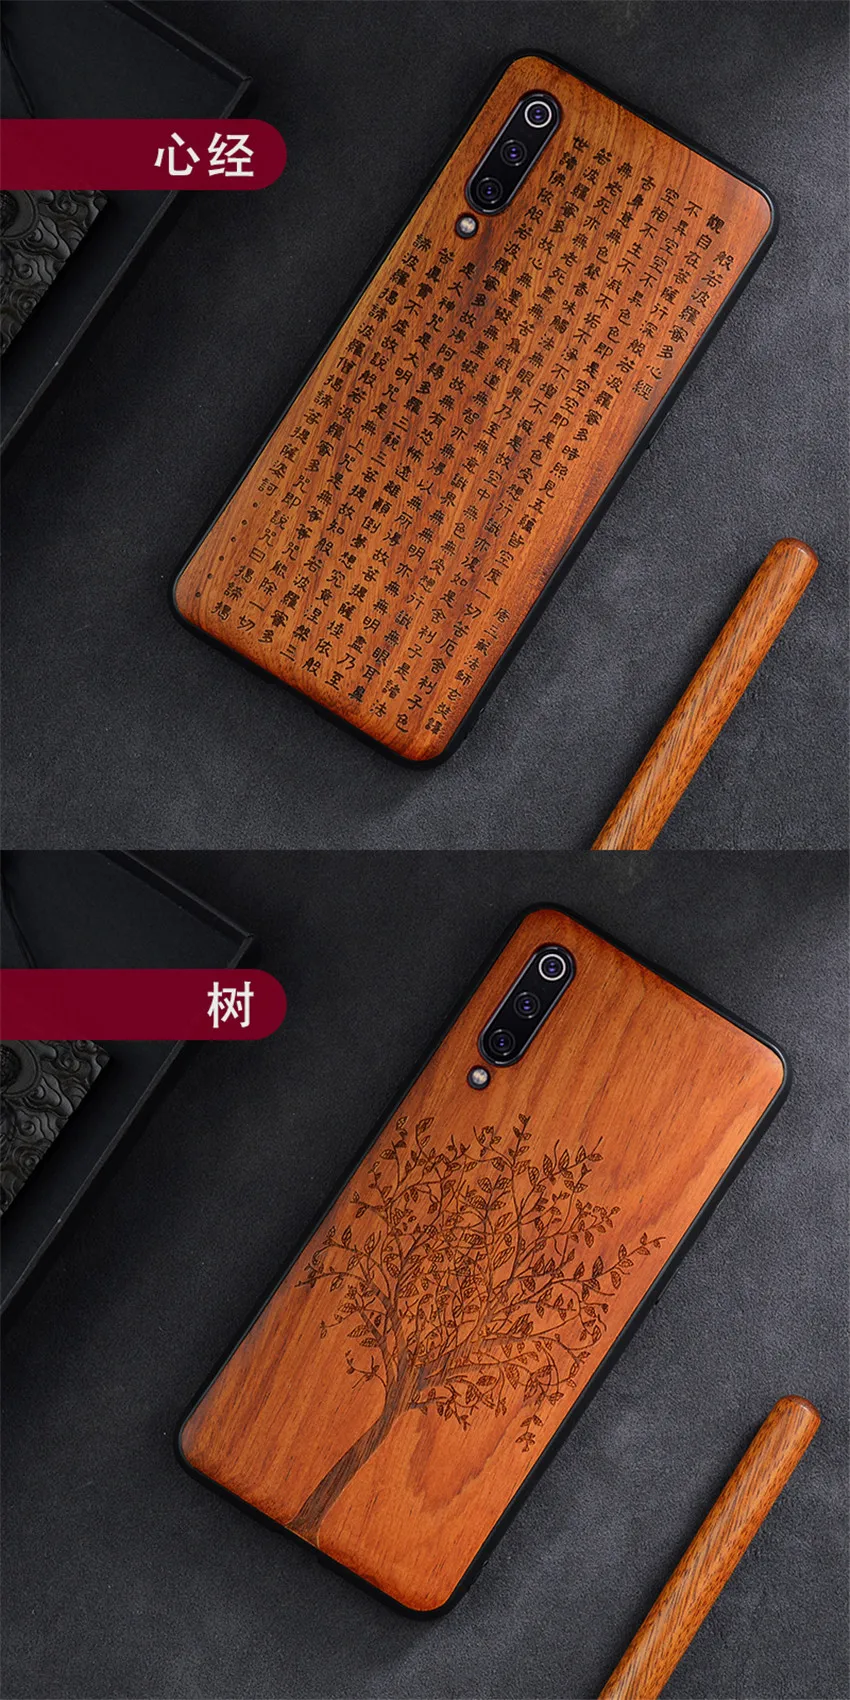 Custo mi zed резной чехол для Xiaomi mi 9 SE тонкий деревянный задний Чехол TPU бампер чехол на Xiaomi mi 9 Se Xiaomi mi 9 чехол для телефона s